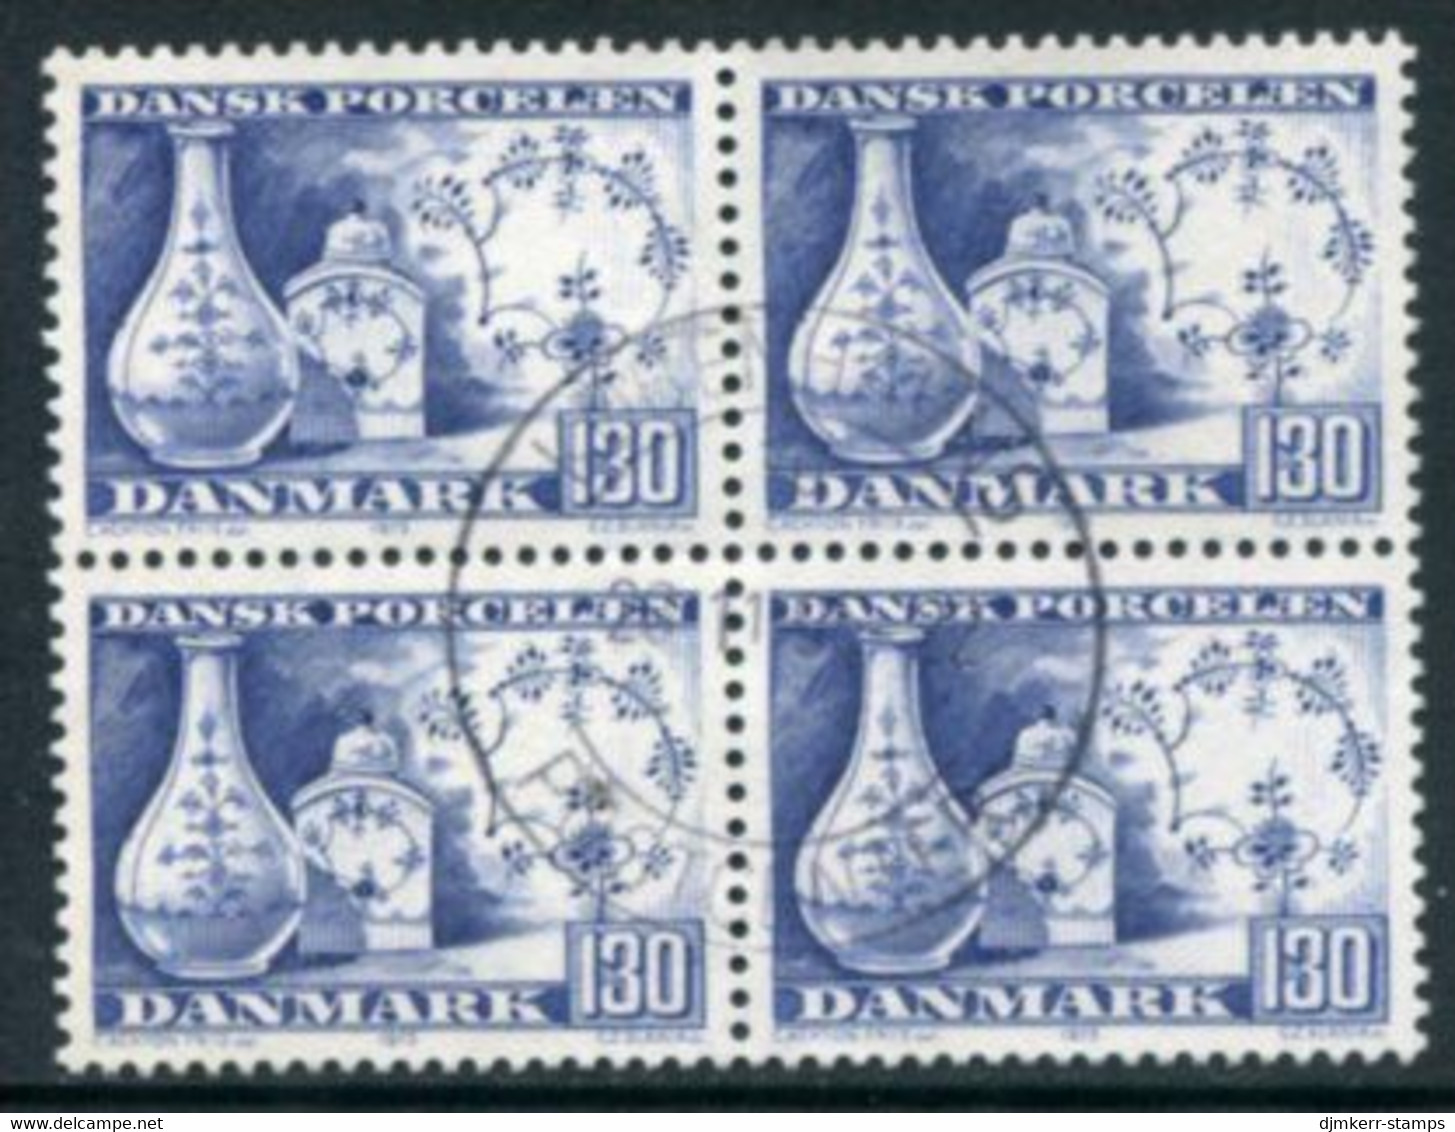 DENMARK 1975 Danish Porcelain 130 Øre. Block Of 4 Used   Michel 591 - Used Stamps